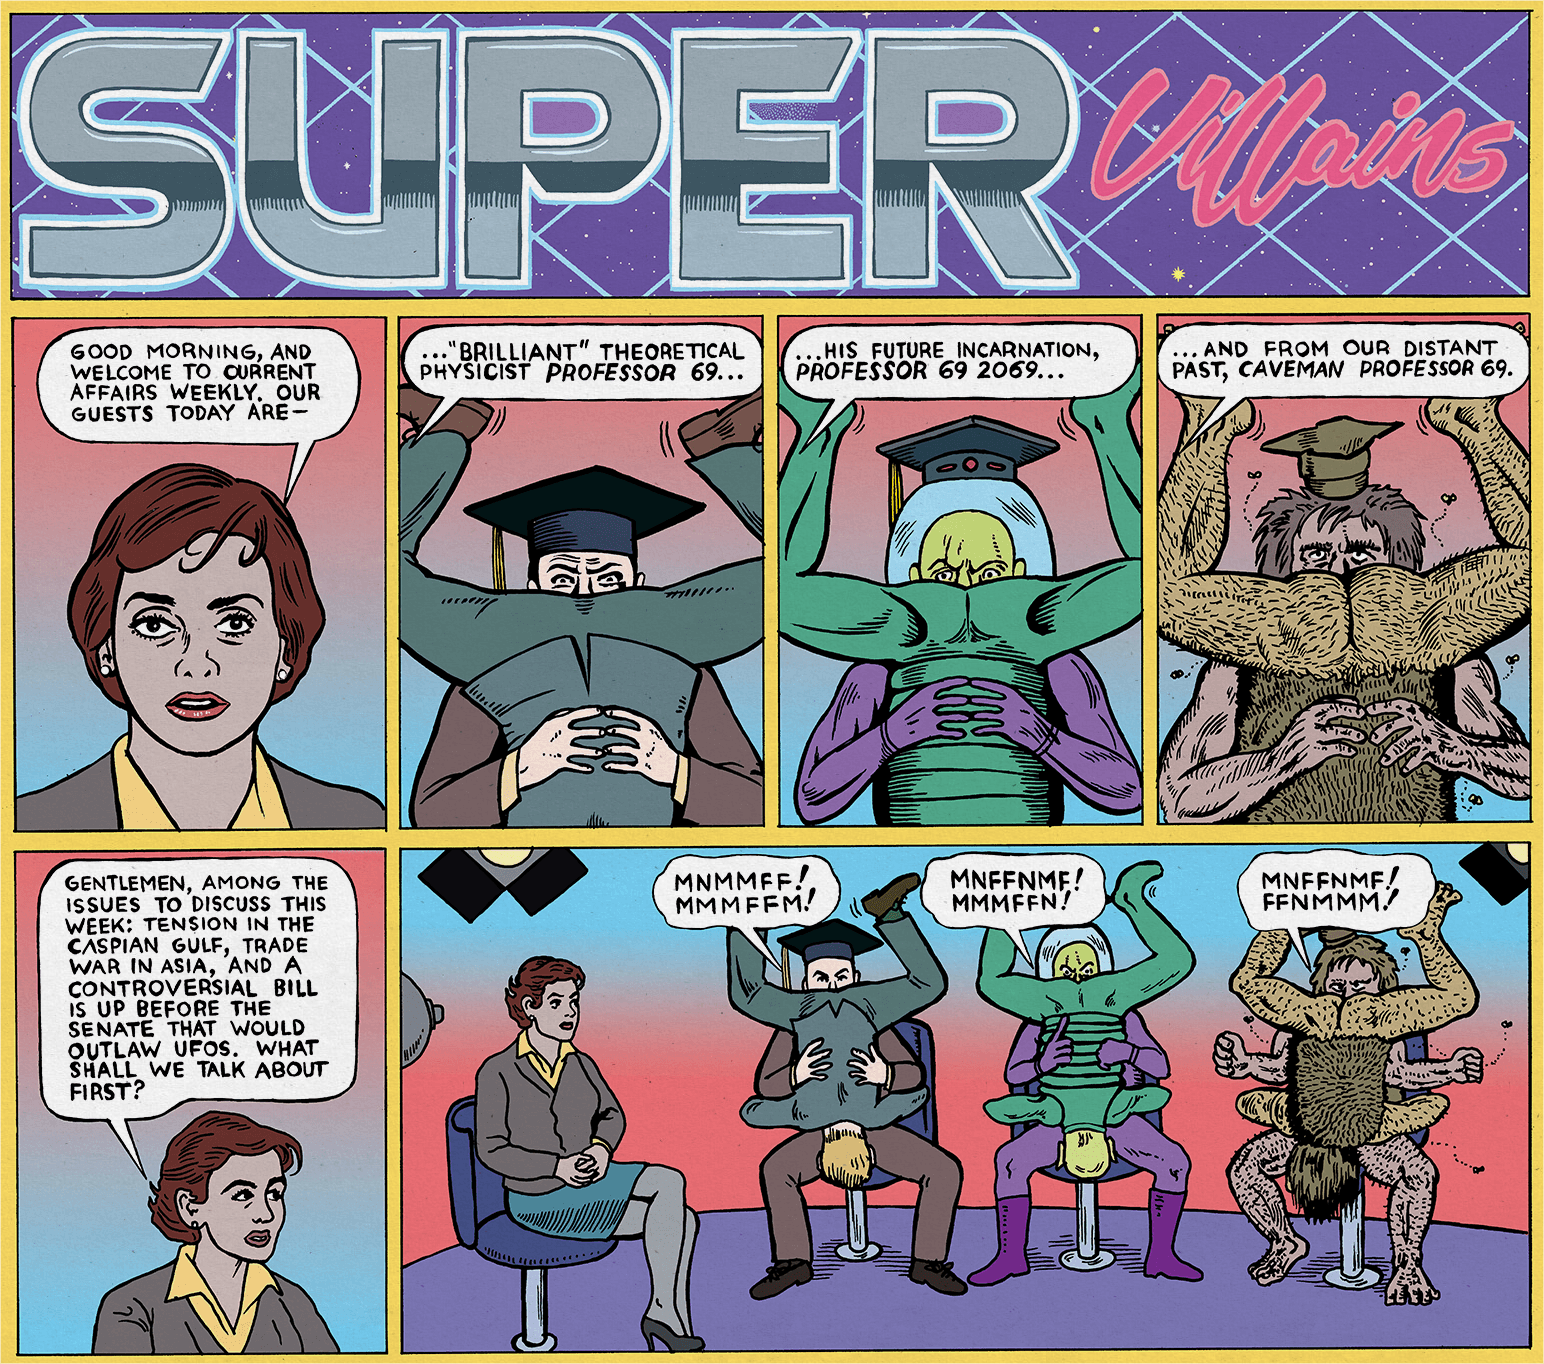 Supervillains by michael-kupperman